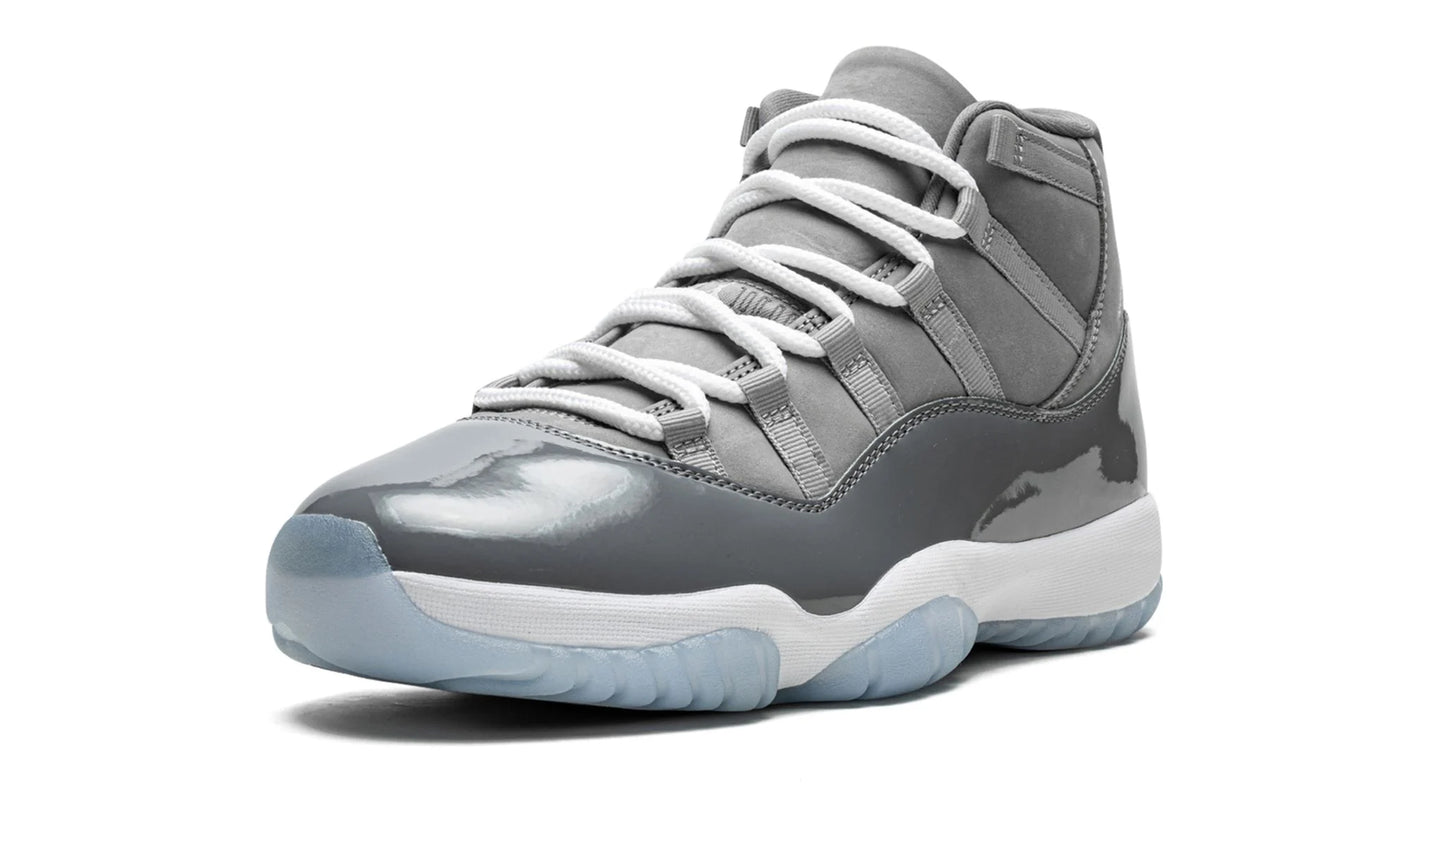 Jordan 11 Cool Grey Single Shoe Front View